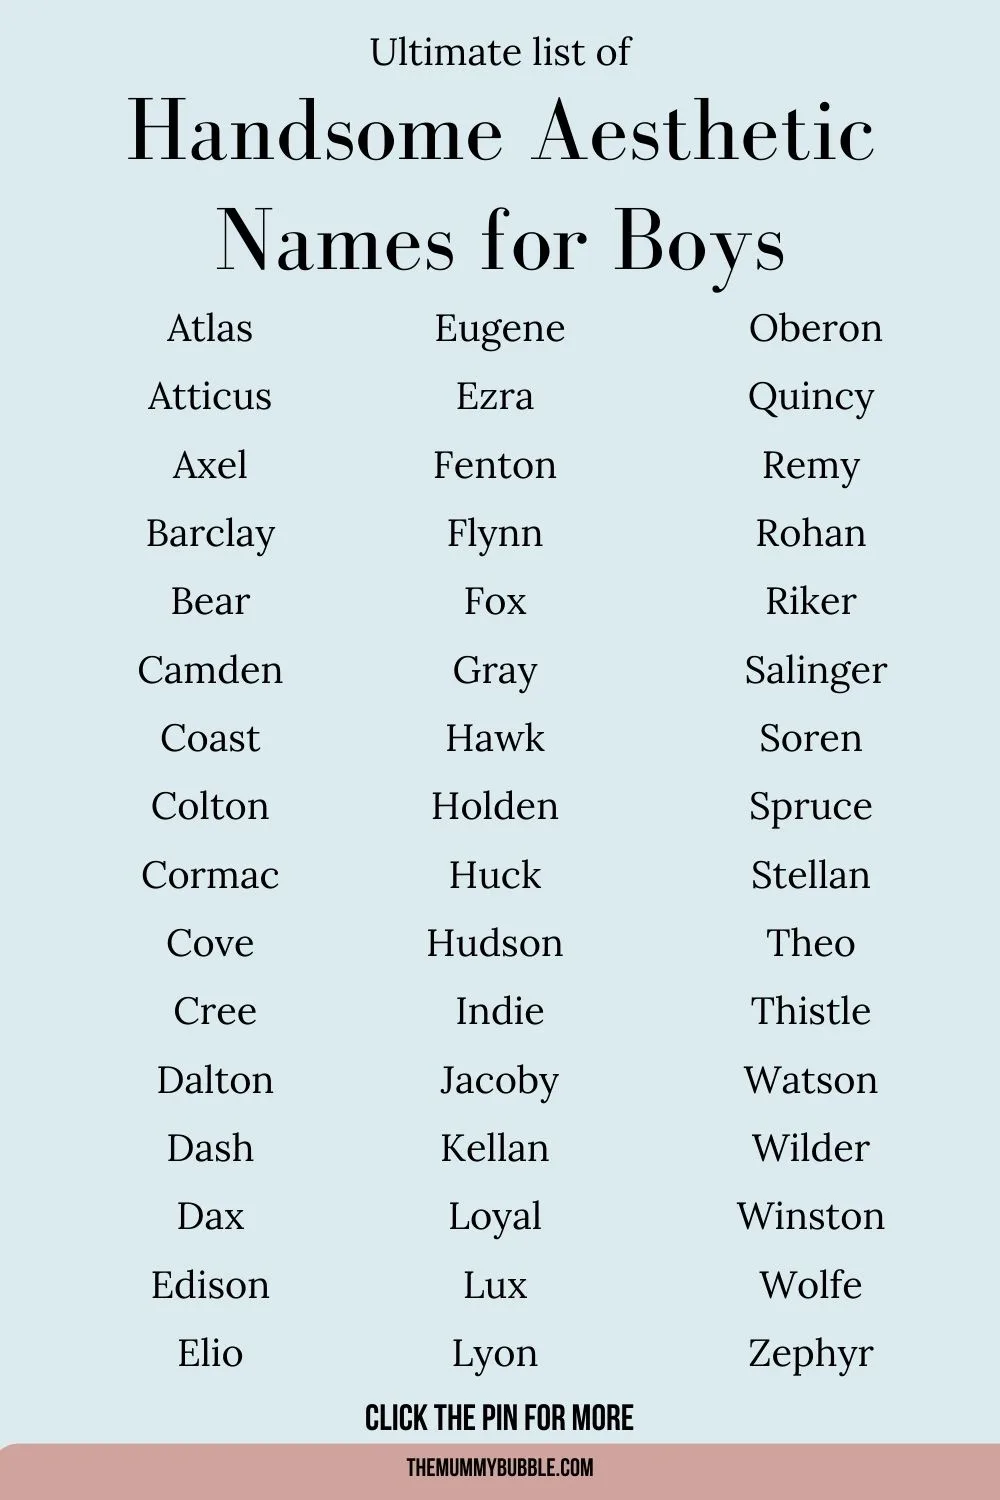 Aesthetic names for boys 